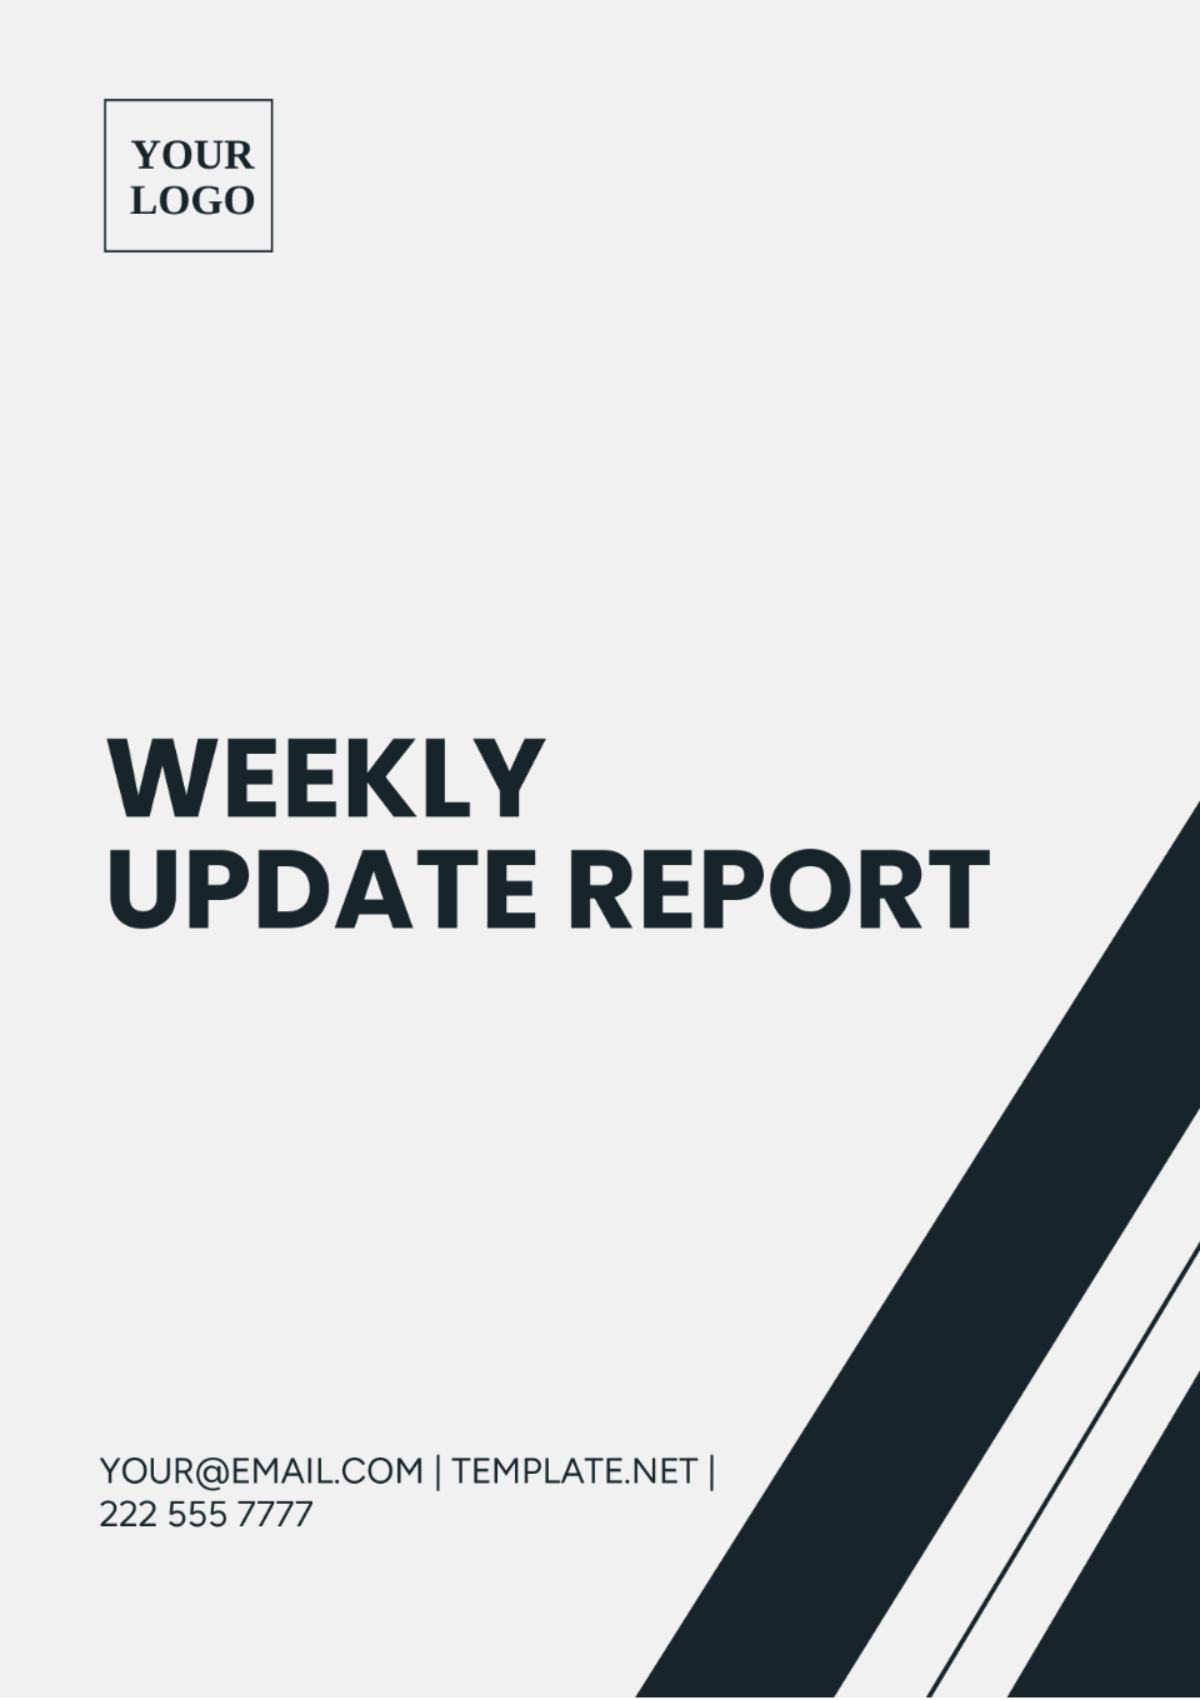 Weekly Update Report Template